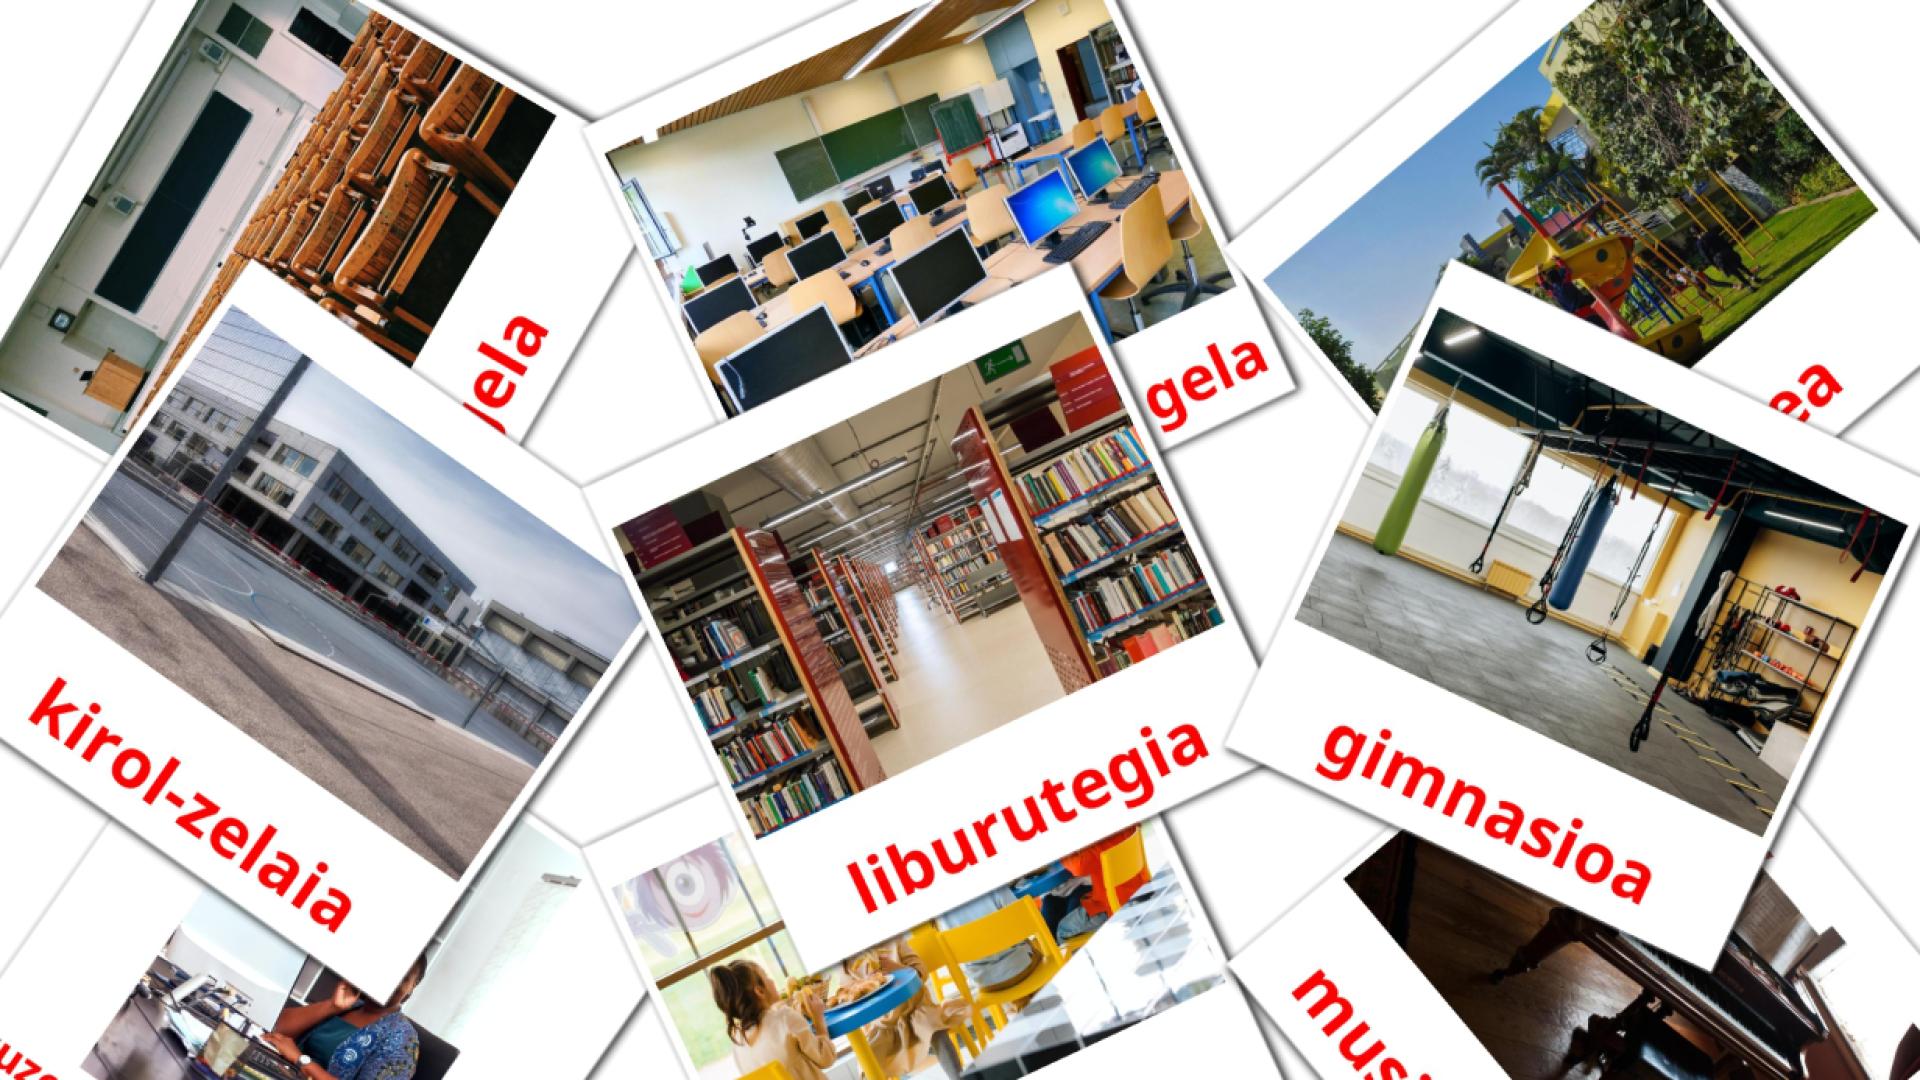 School building - basque vocabulary cards